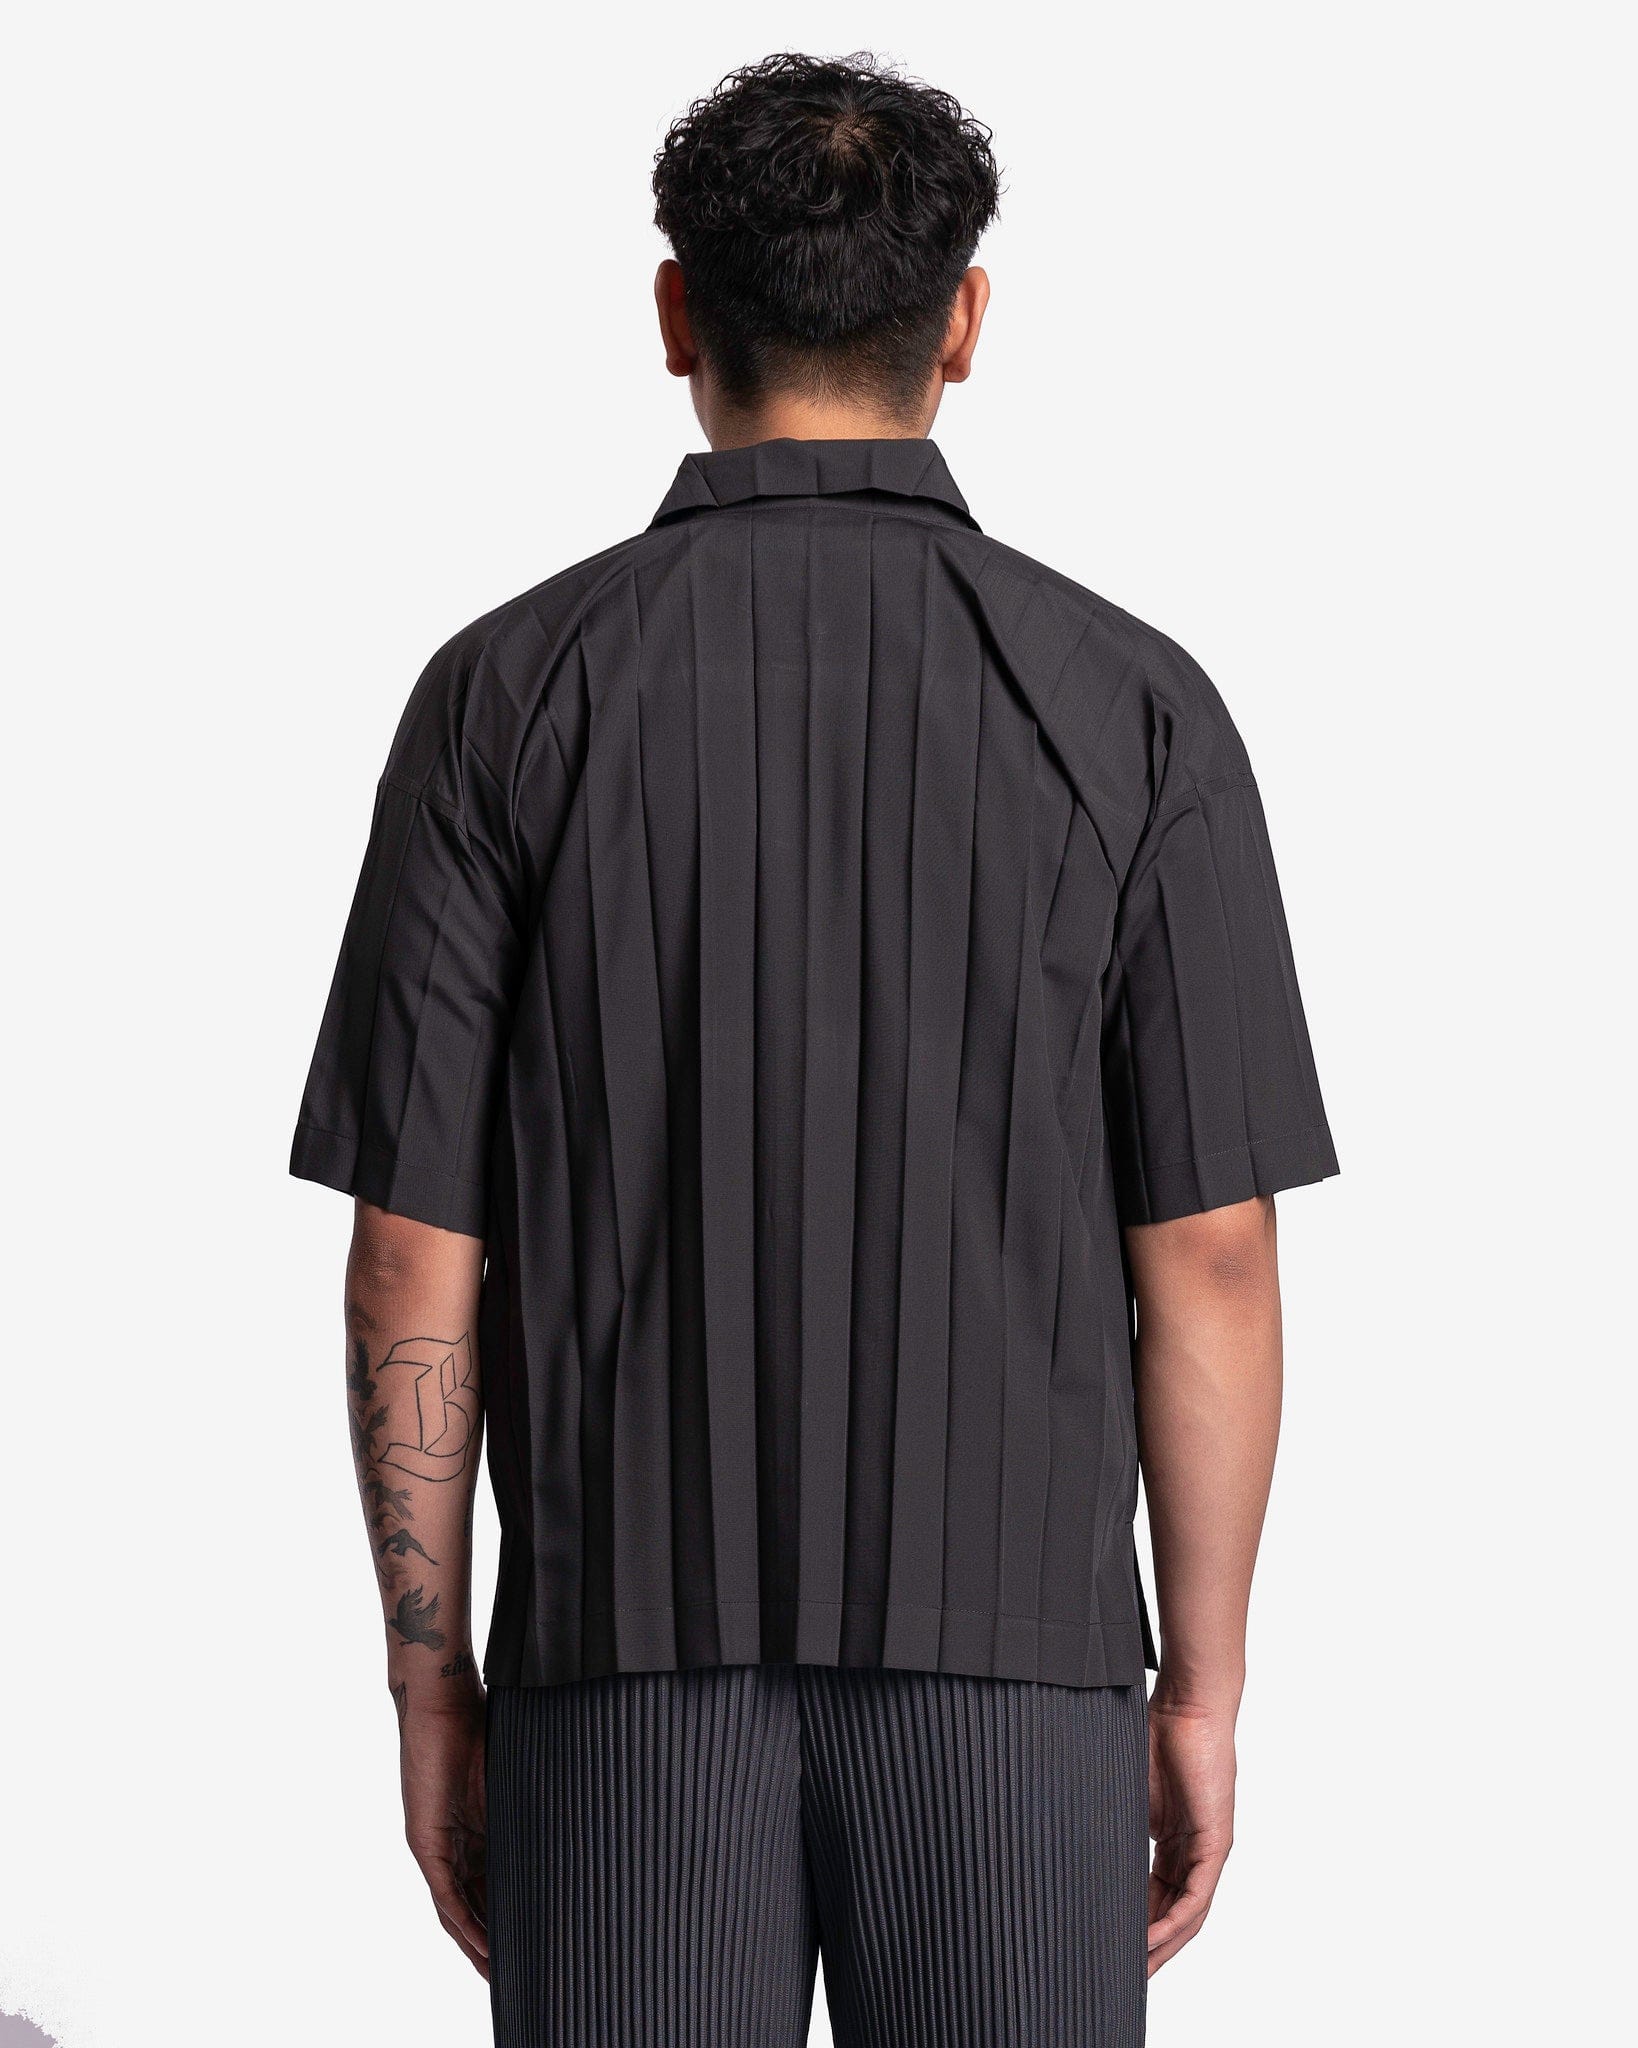 Homme Plissé Issey Miyake Men's Shirts Edge Short Sleeve Shirt in Charcoal Grey